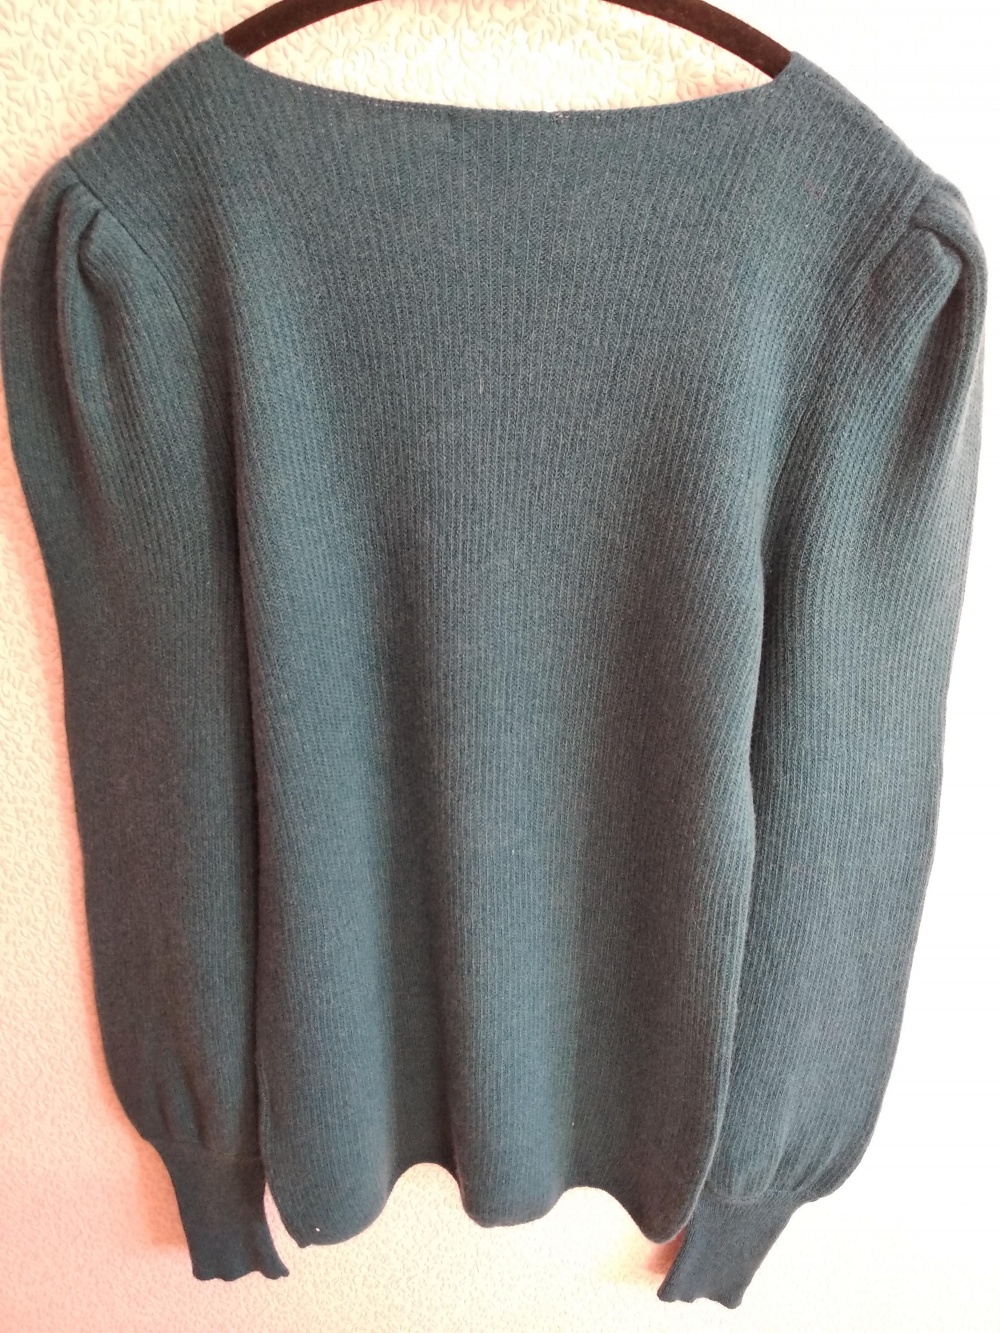 Пуловер Gaala размер 46/48